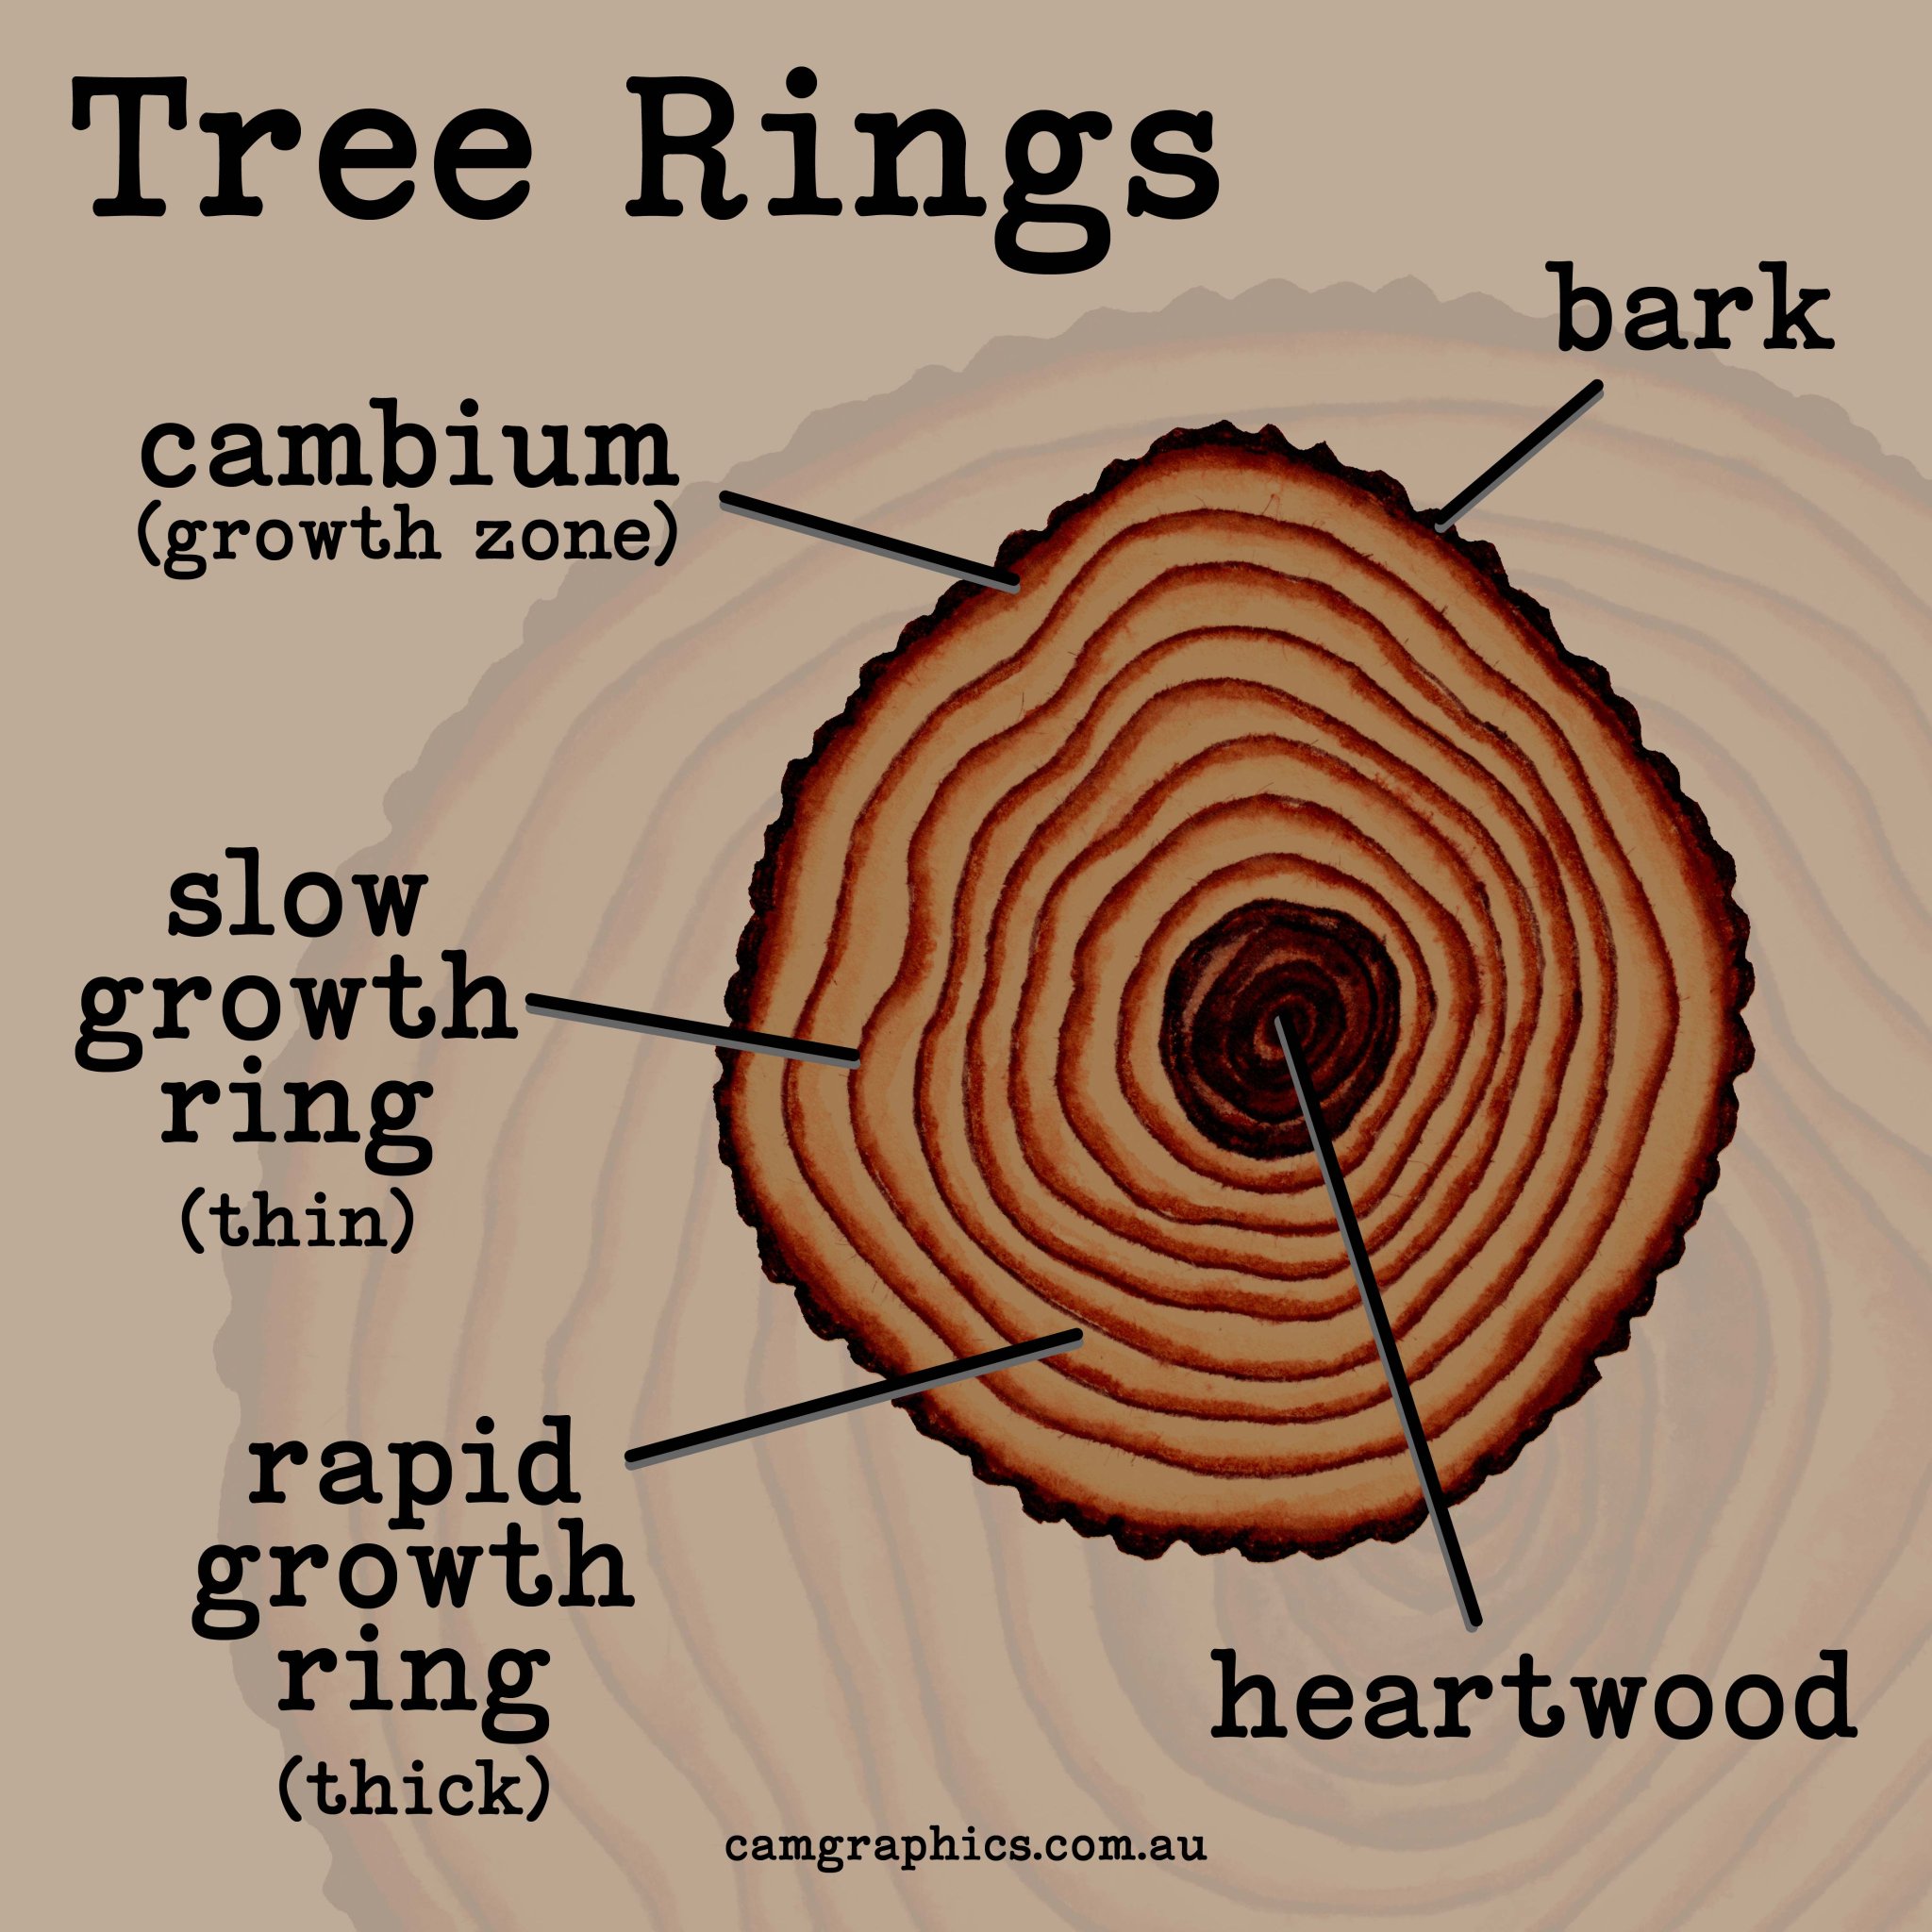 In tree rings, like those shown, each 